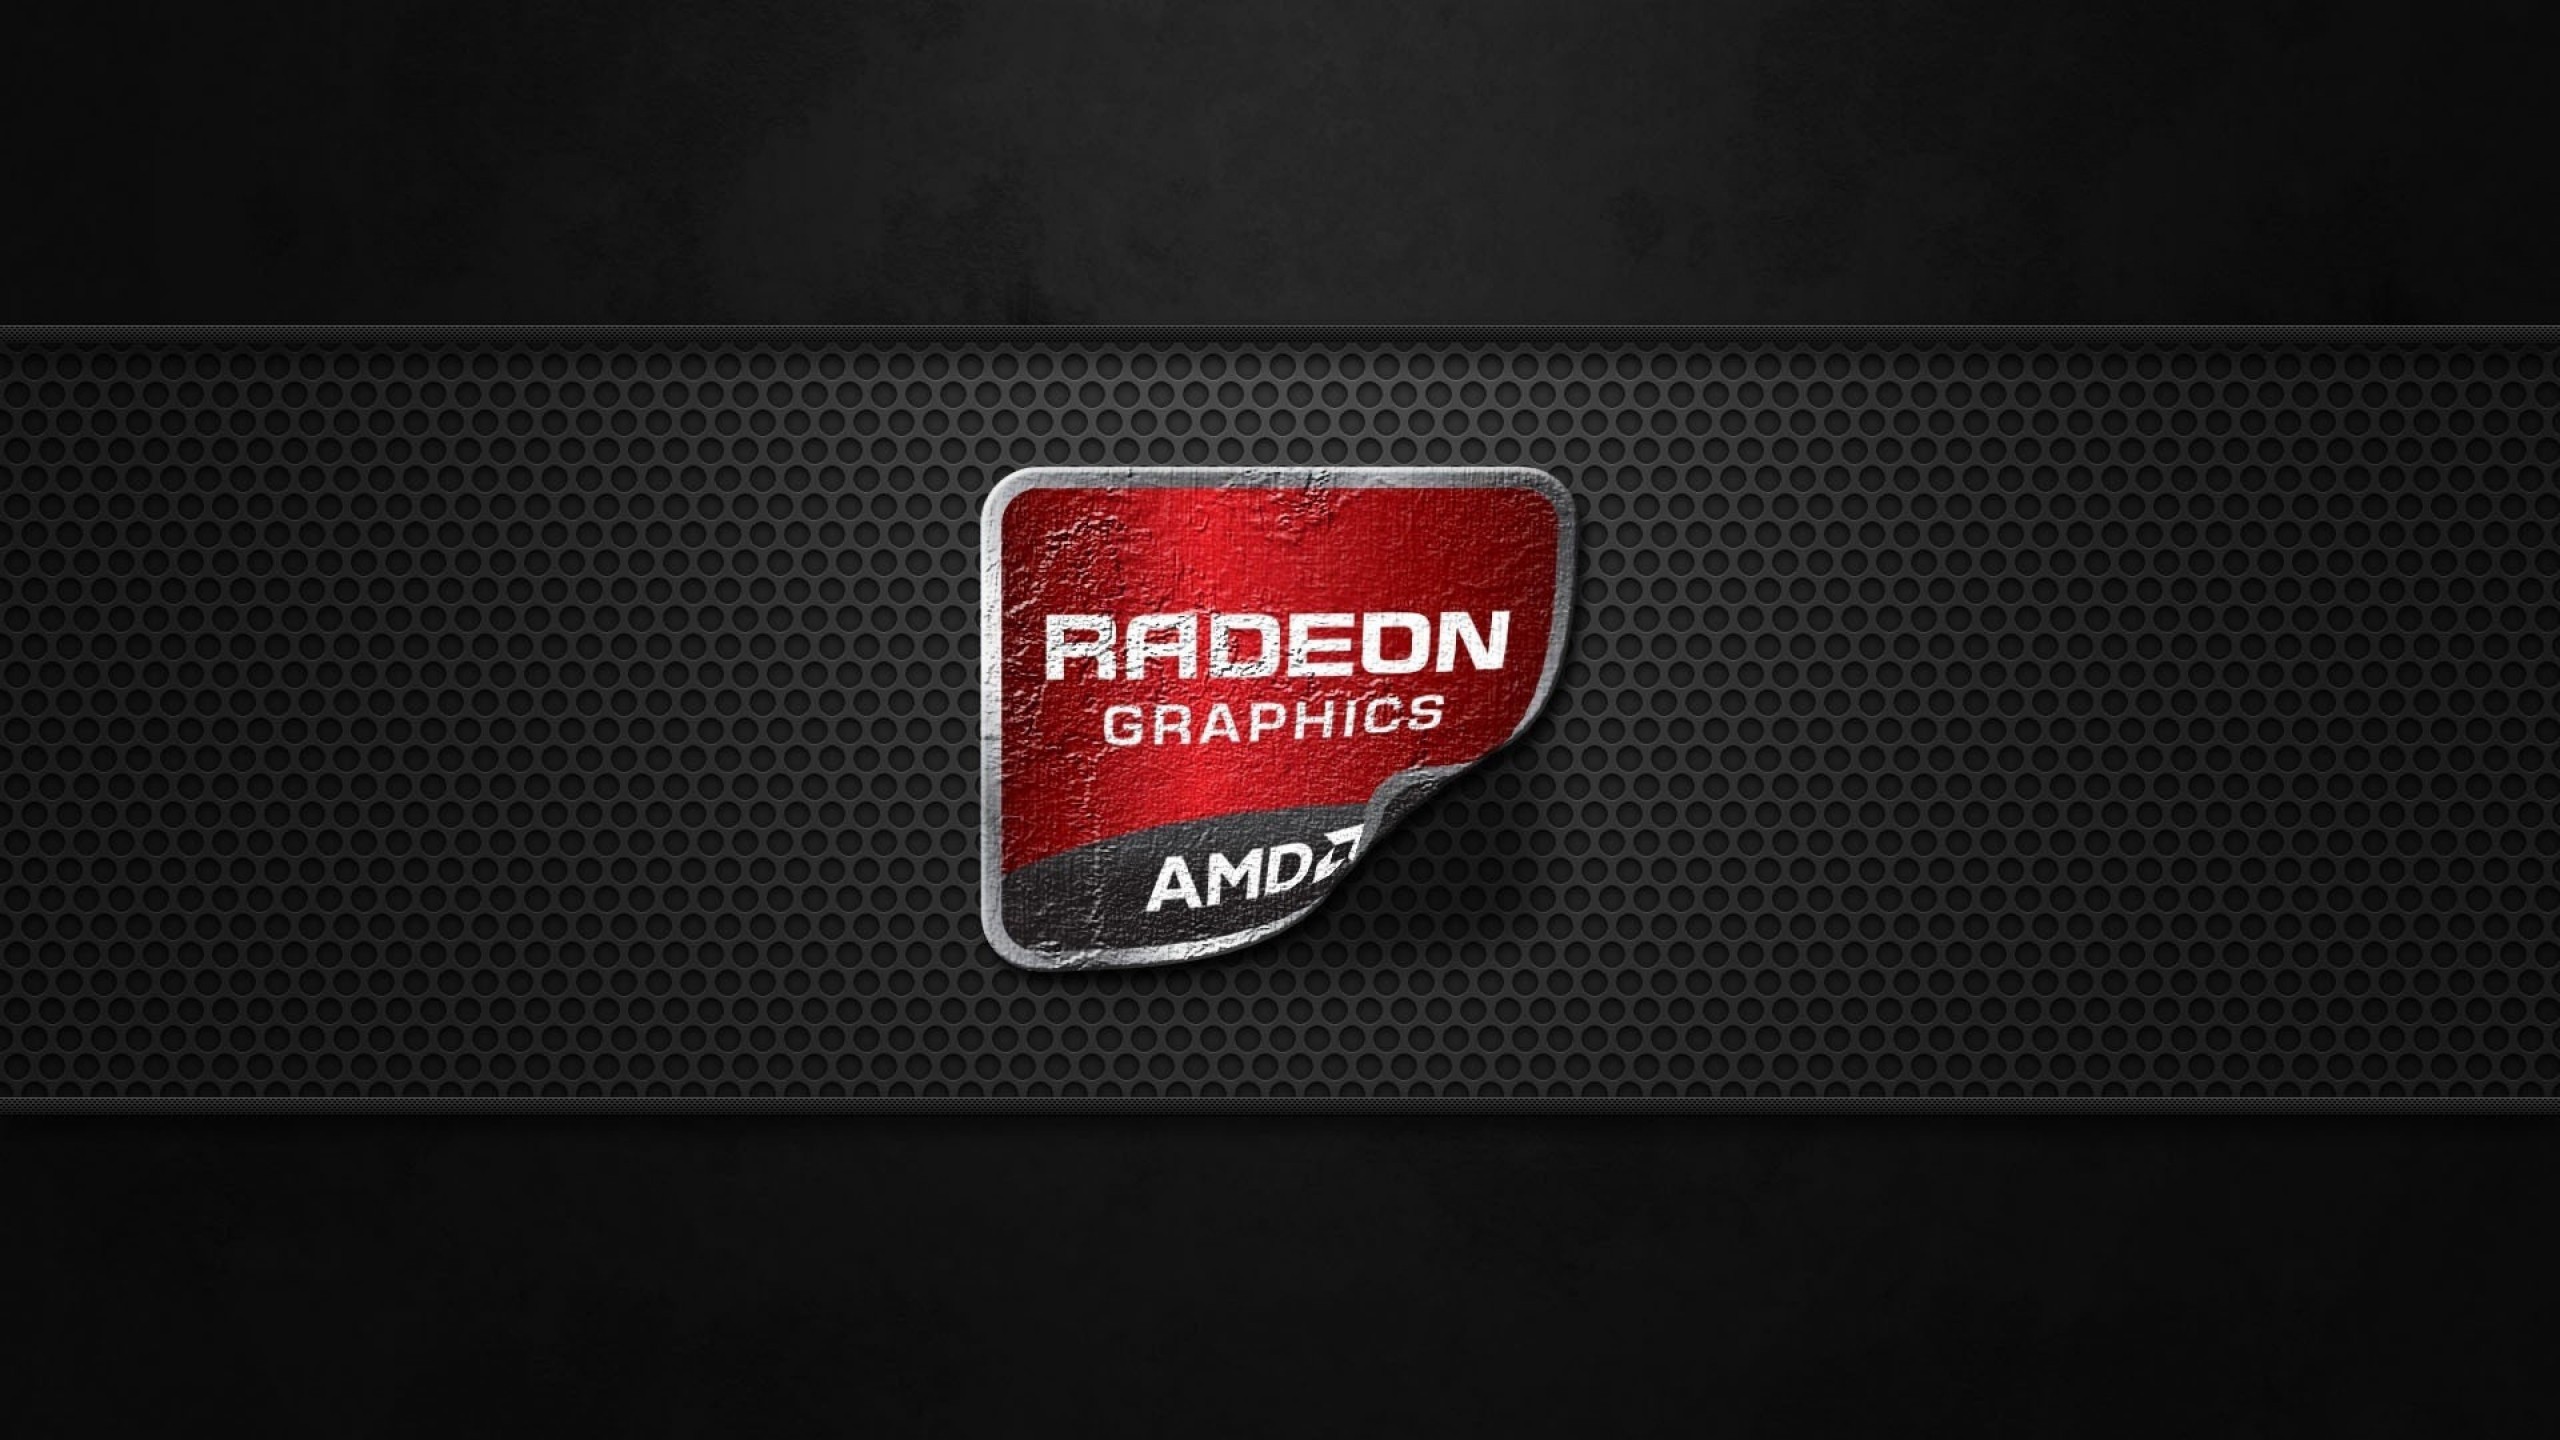 AMD Radeon Graphics Wallpaper for Social Media YouTube Channel Art